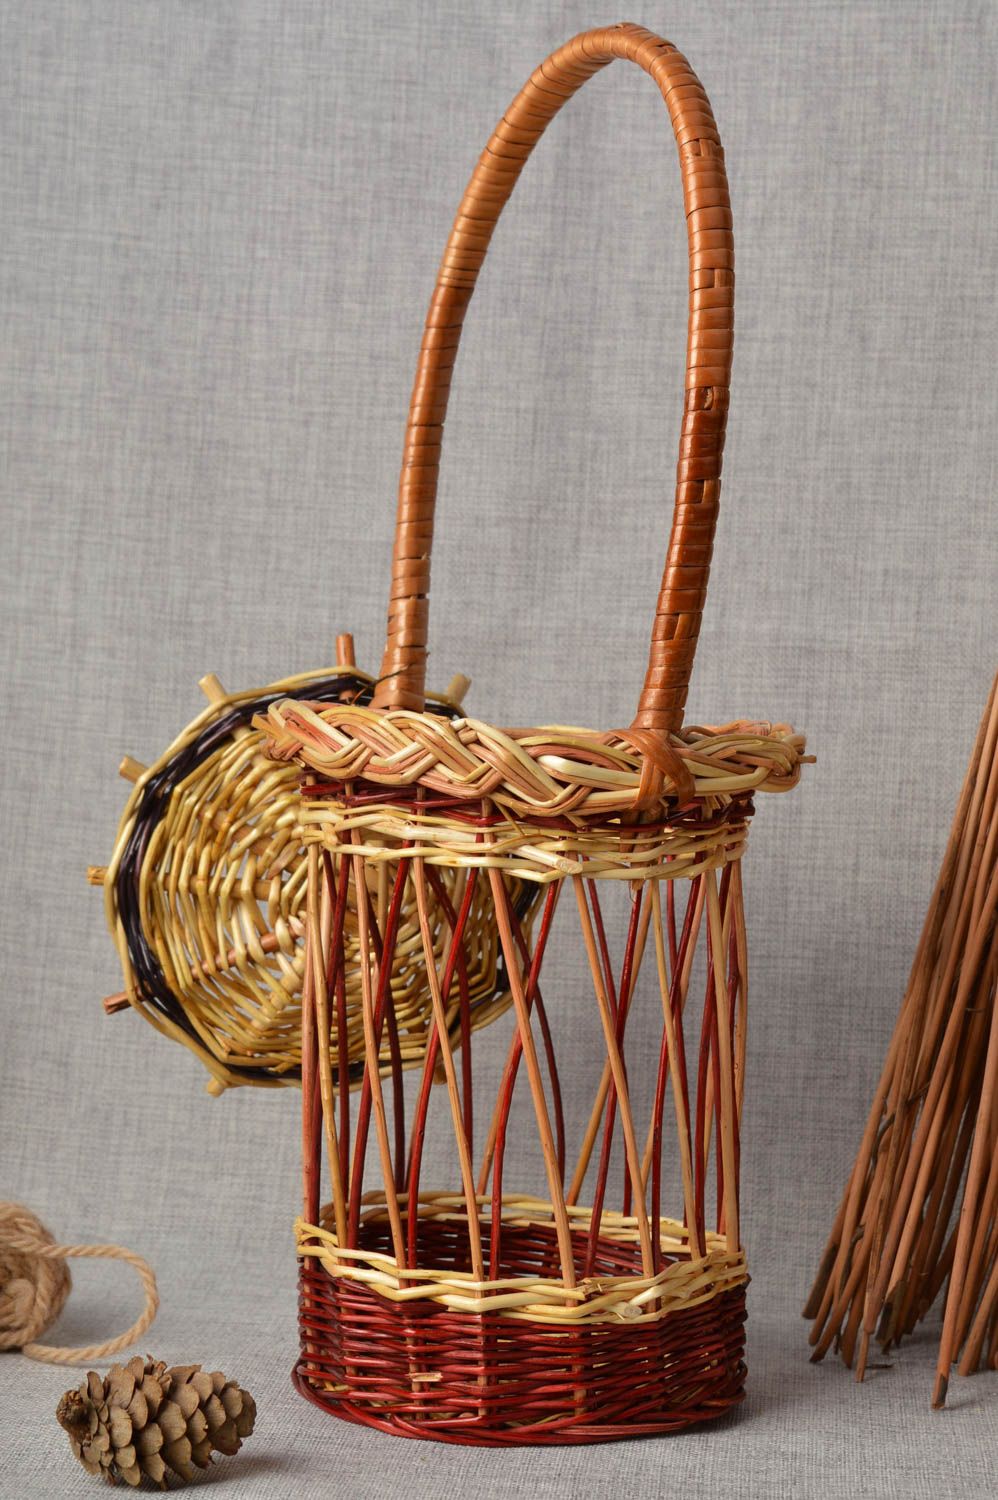 Unusual handmade woven cachepot interior decorating home goods gift ideas photo 1